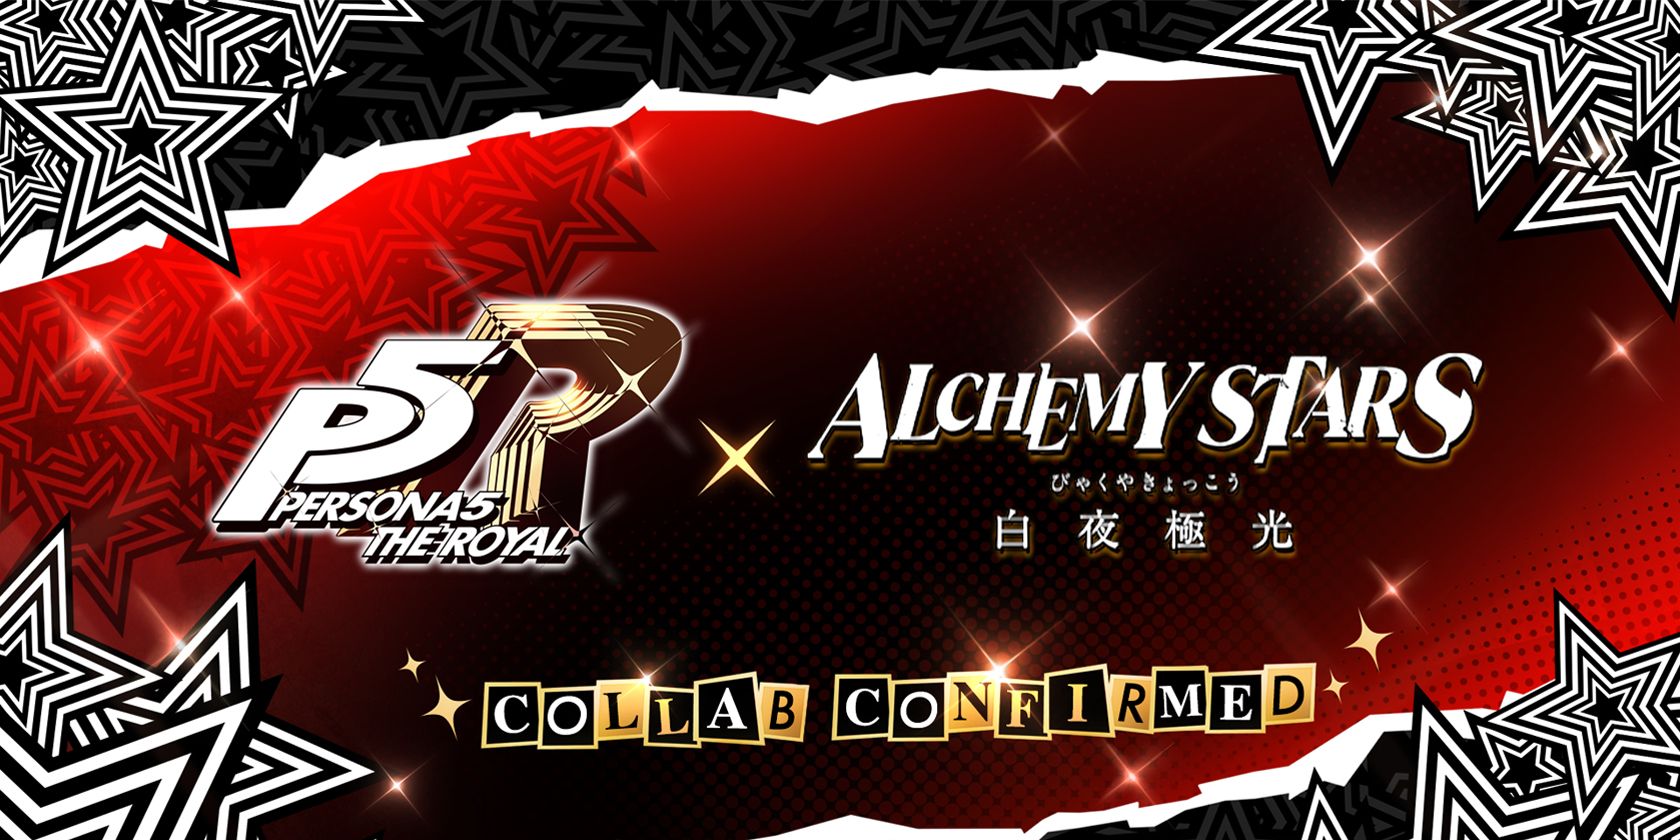 Persona 5 Alchemy Stars crossover game logos